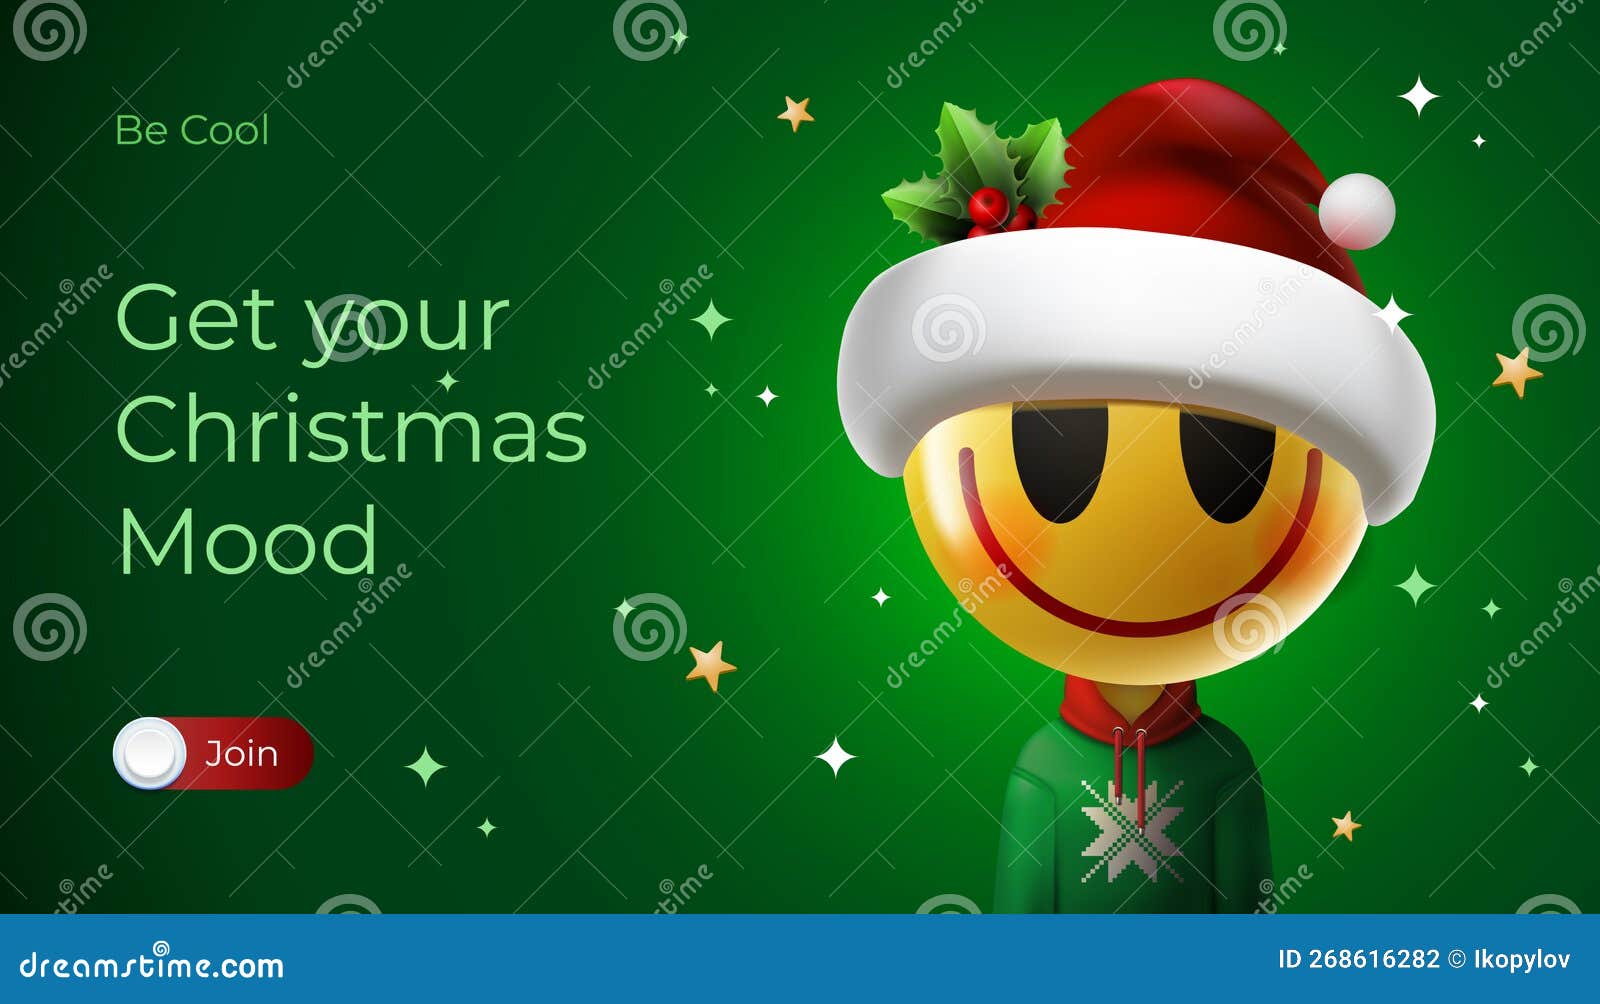 Merry Christmas Web Banner. Mobile Application with Christmas ...